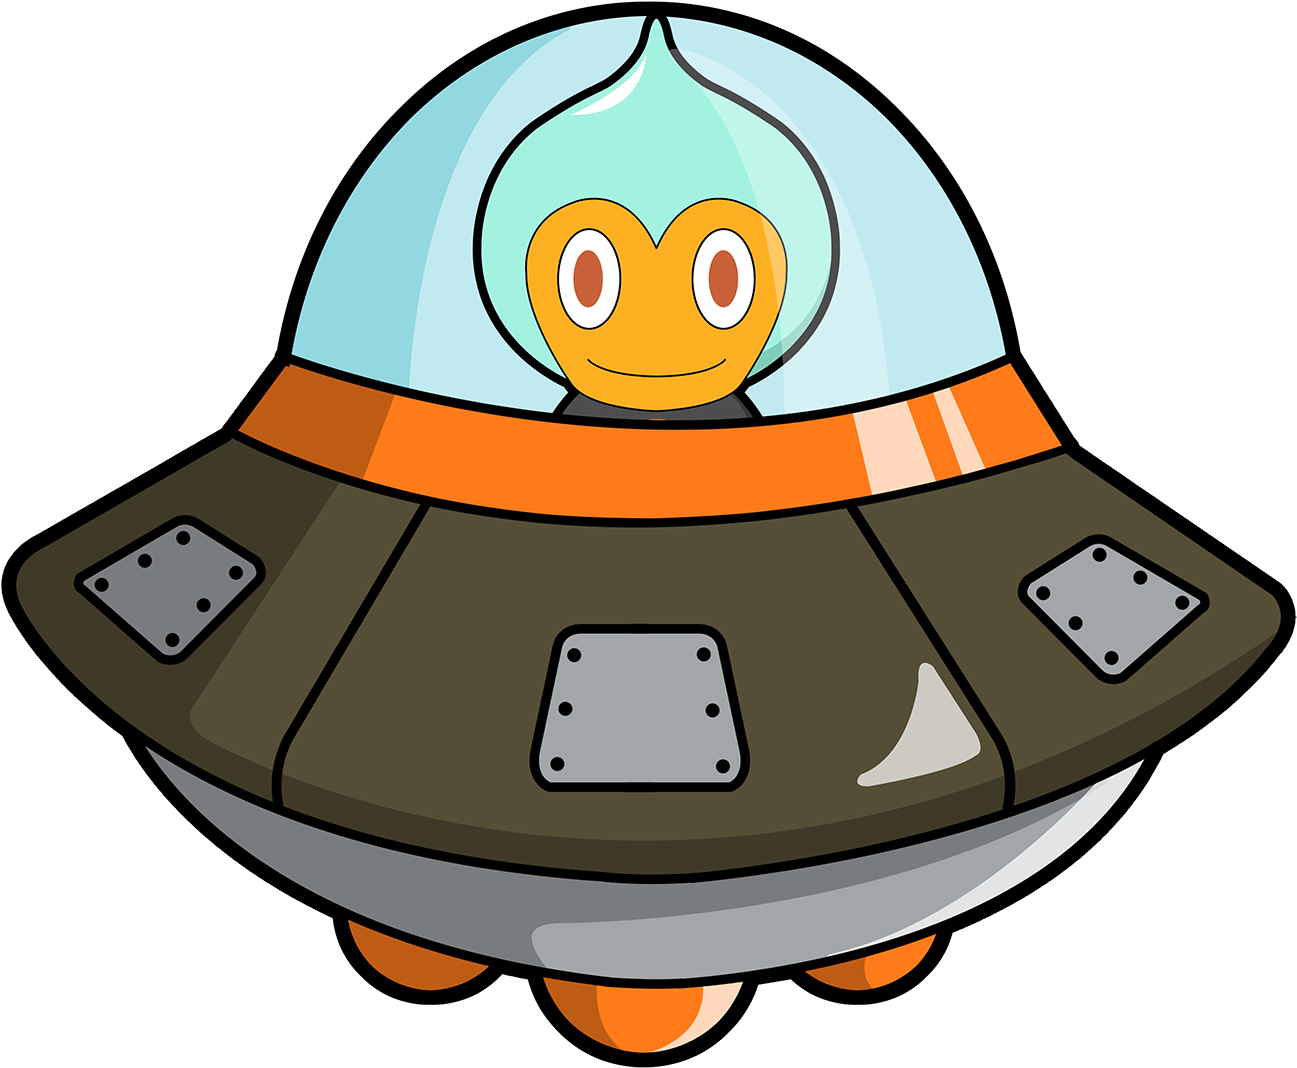 Bitcoinaliens Spaceship - Alien Spaceship Cartoon Png (1600x1200)